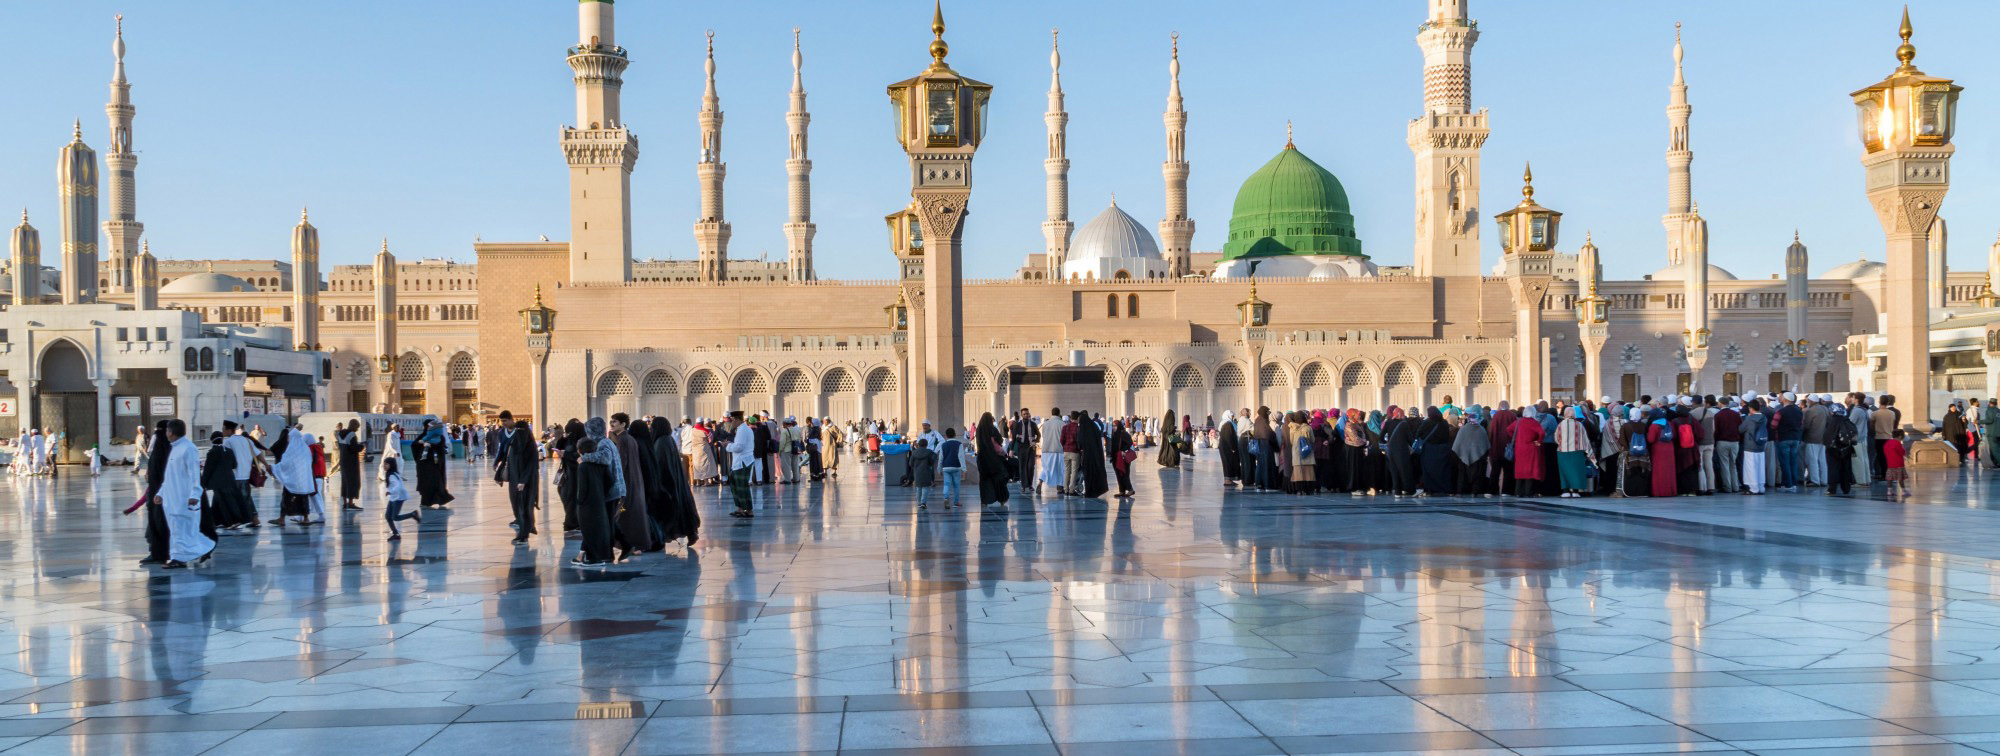 makkah holy places to visit